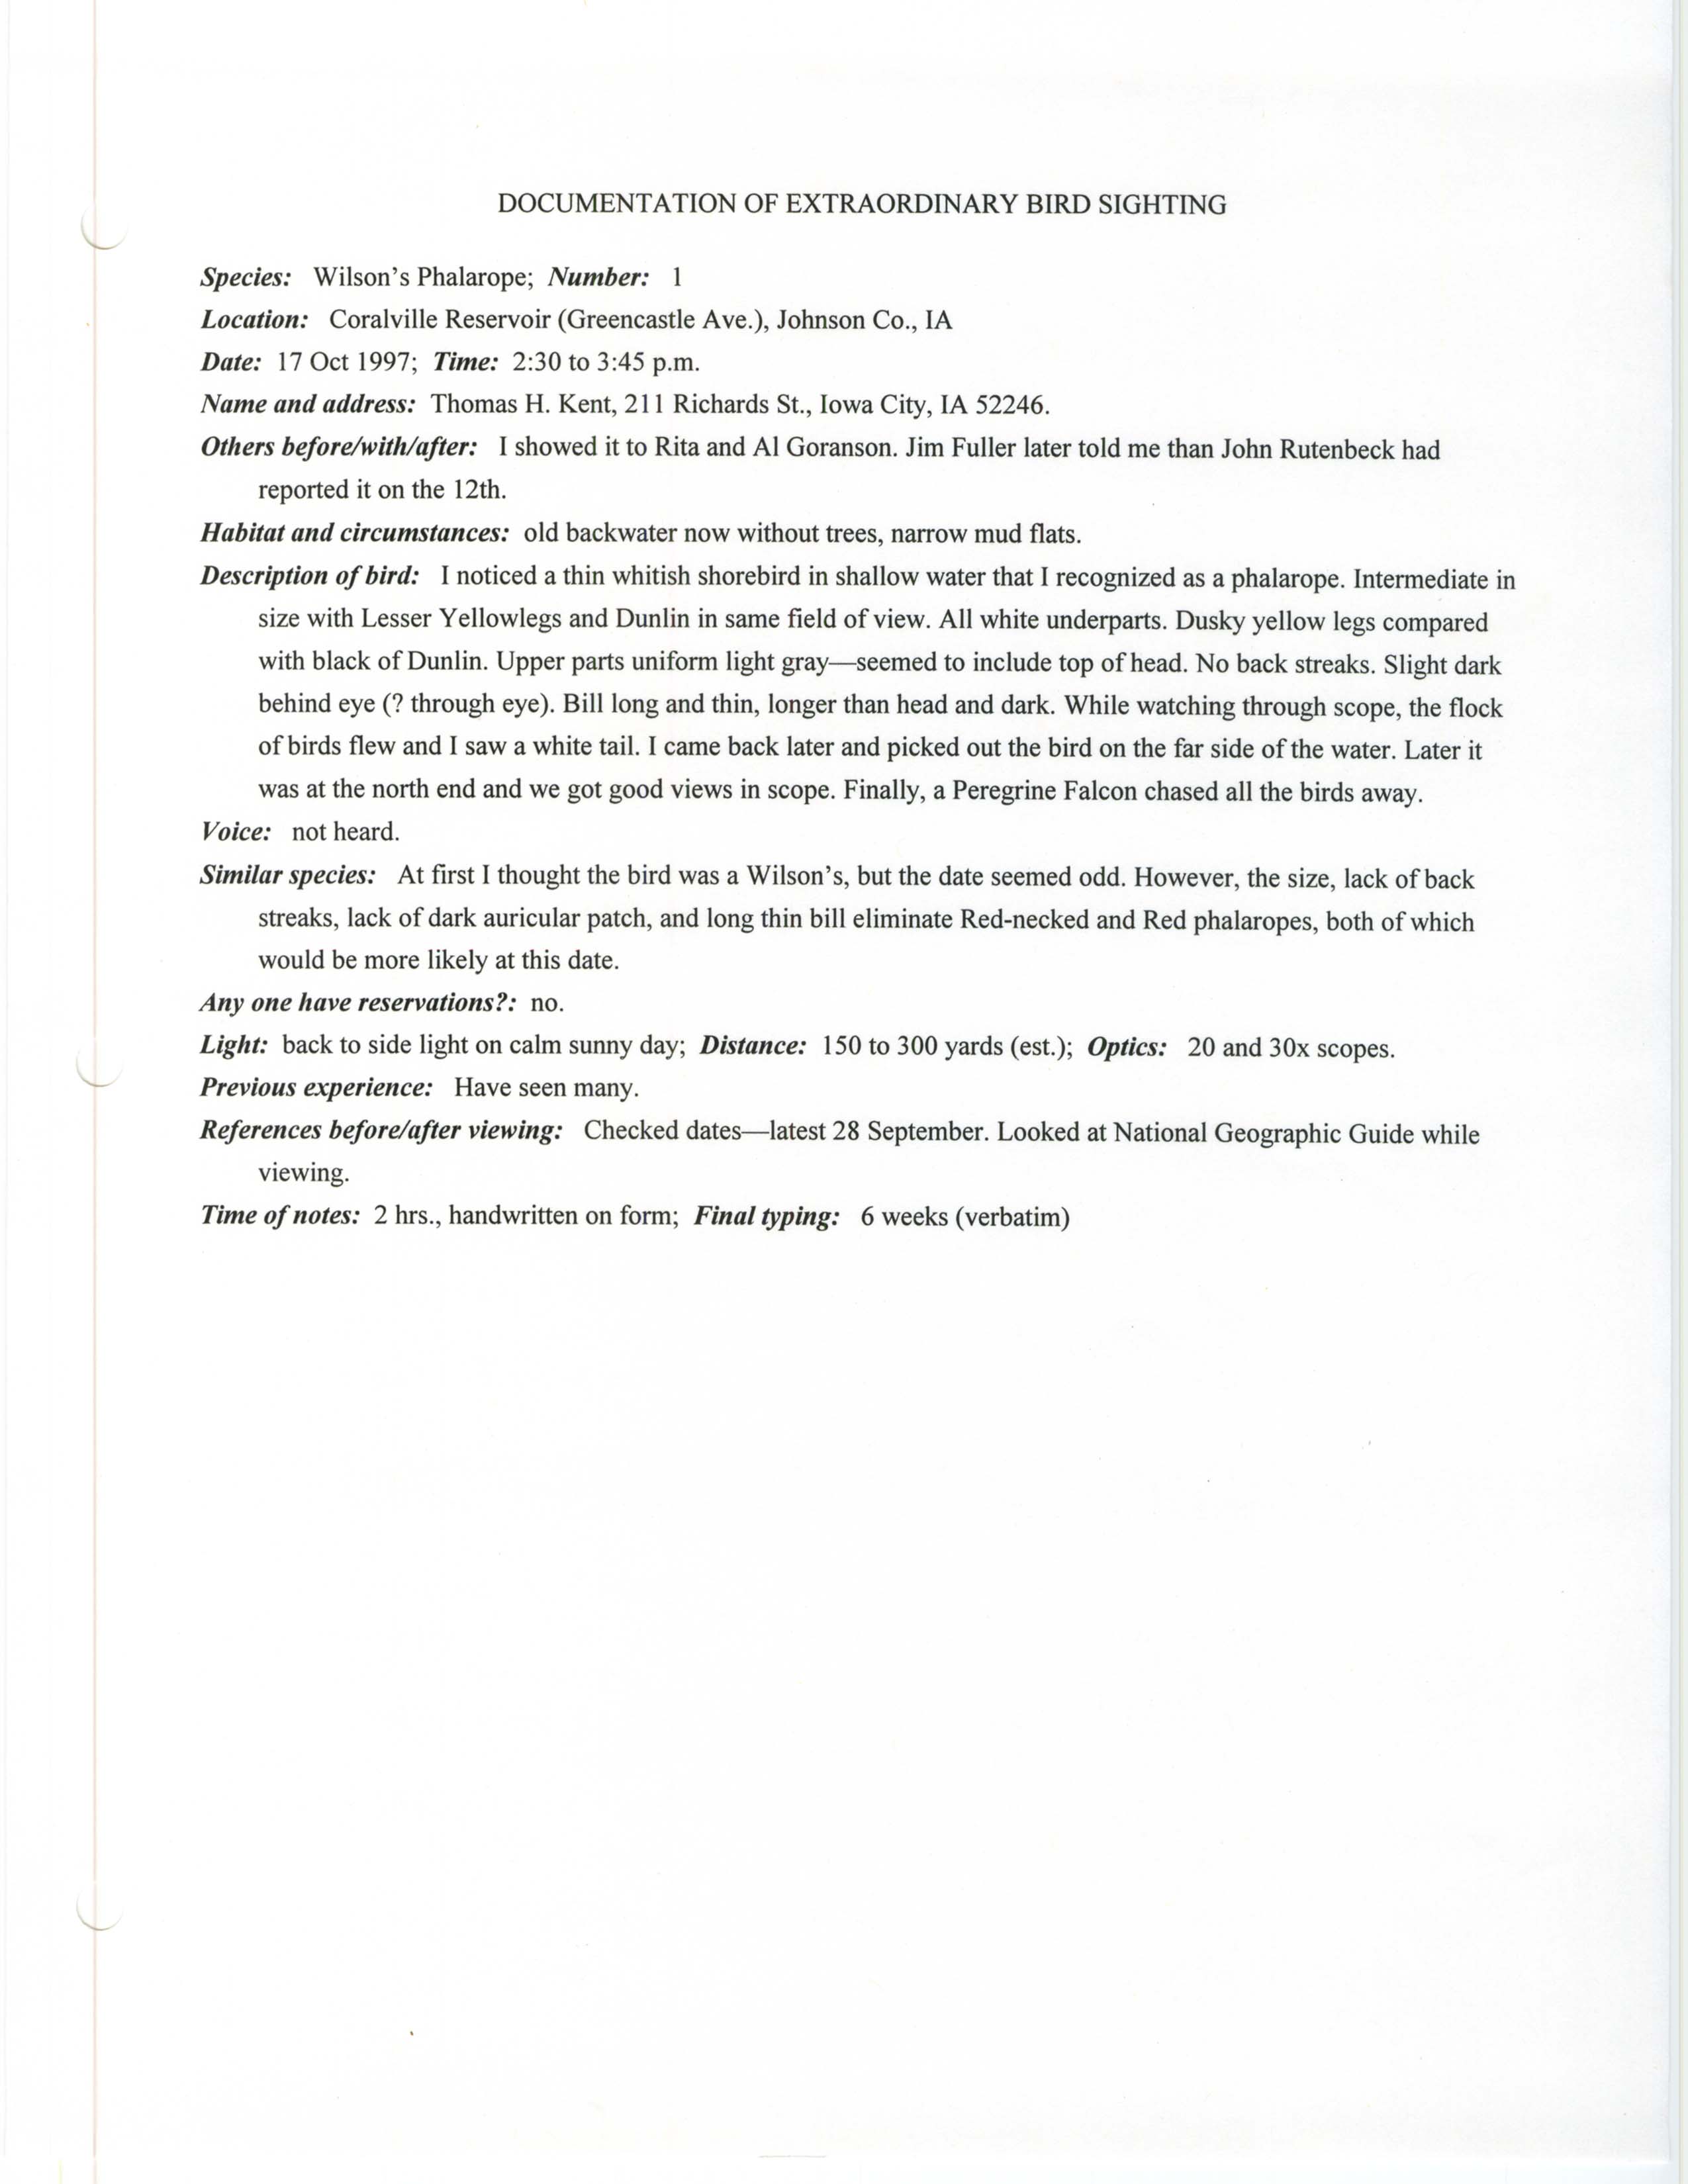 Rare bird documentation form for Wilson's Phalarope at Coralville Reservoir, 1997